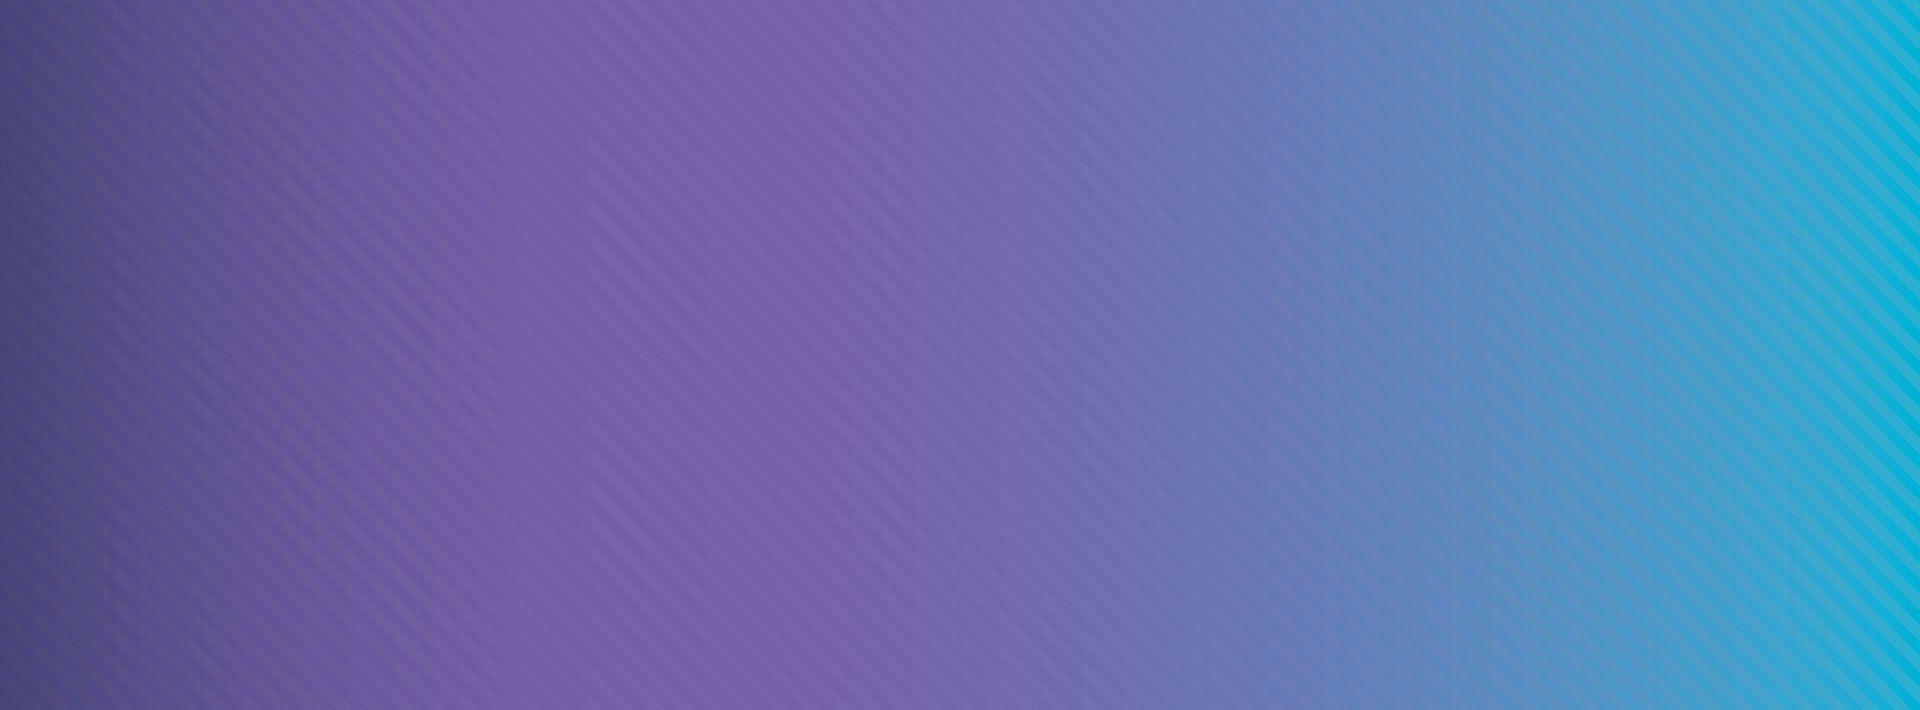 gradient background purple to blue